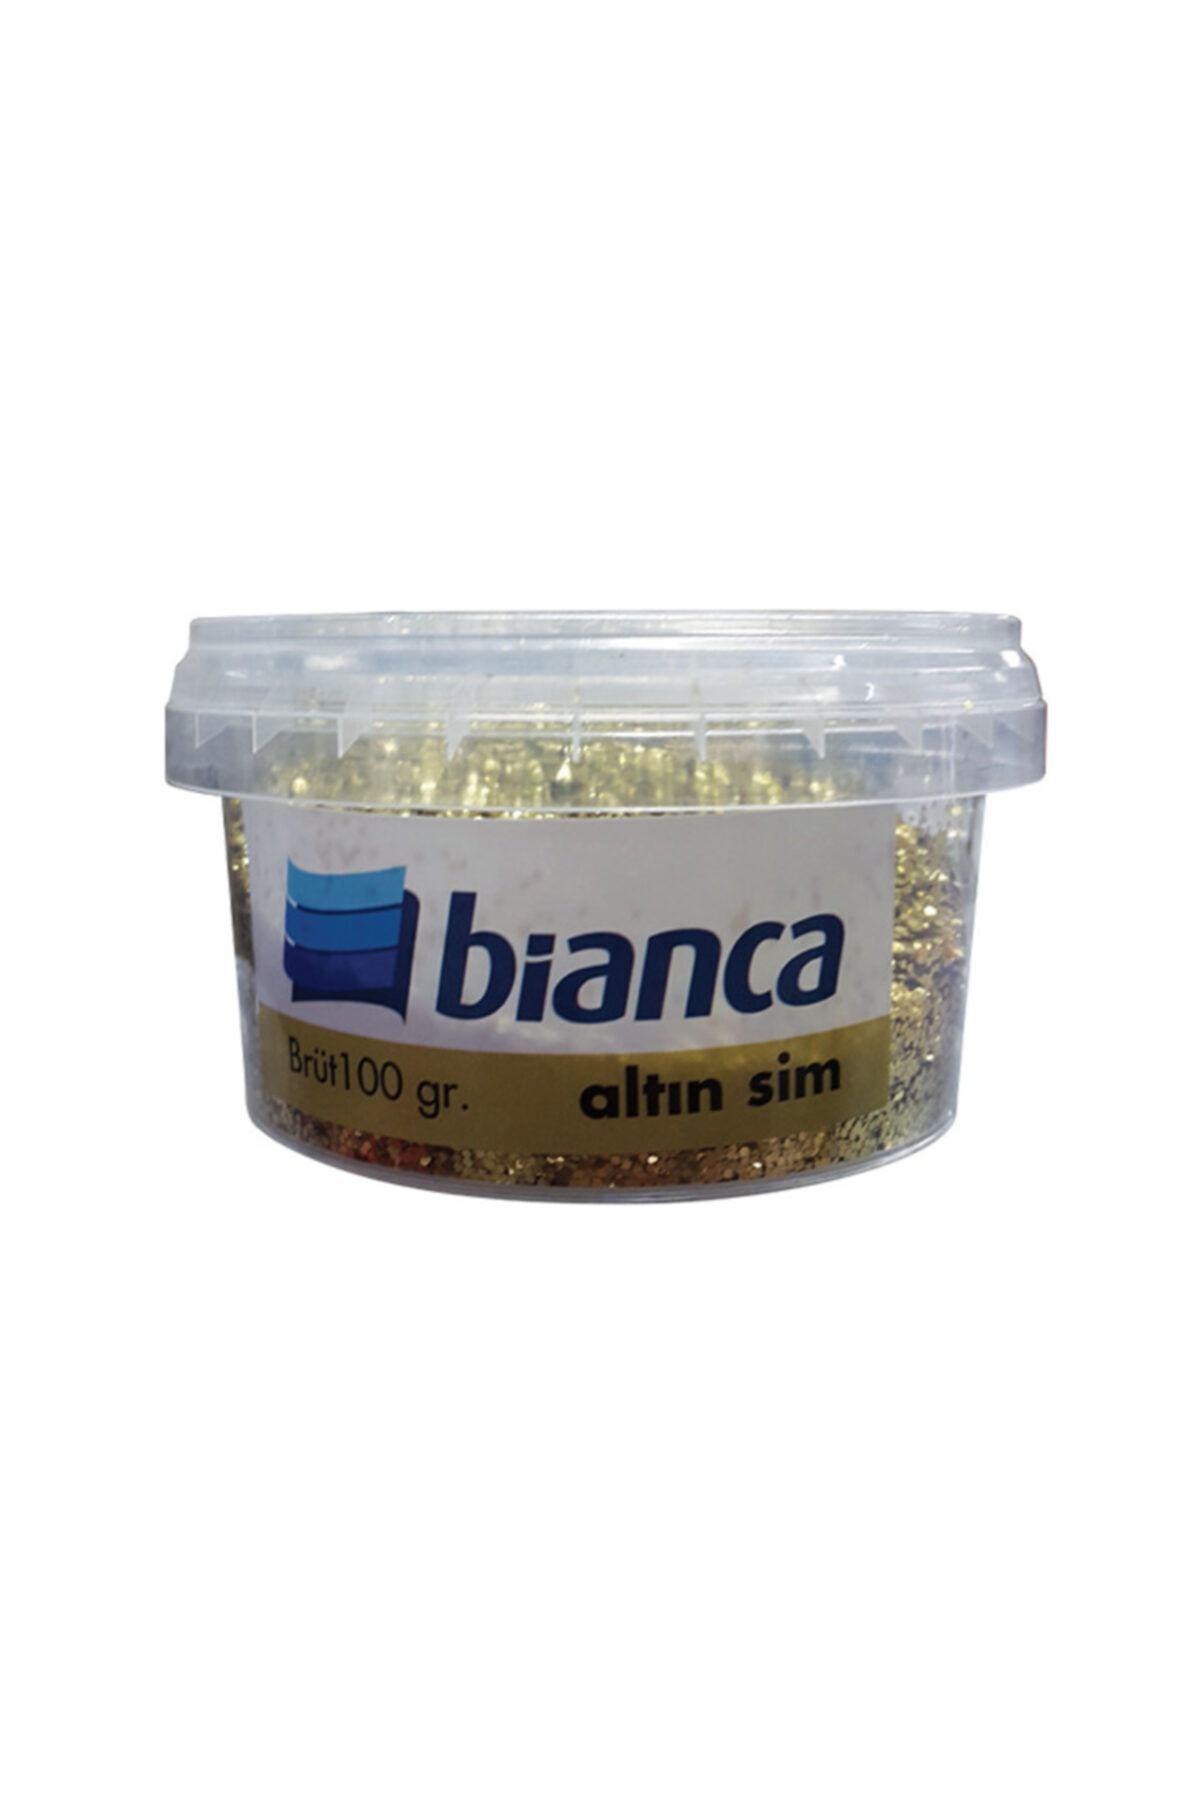 Bianca Altın Sim